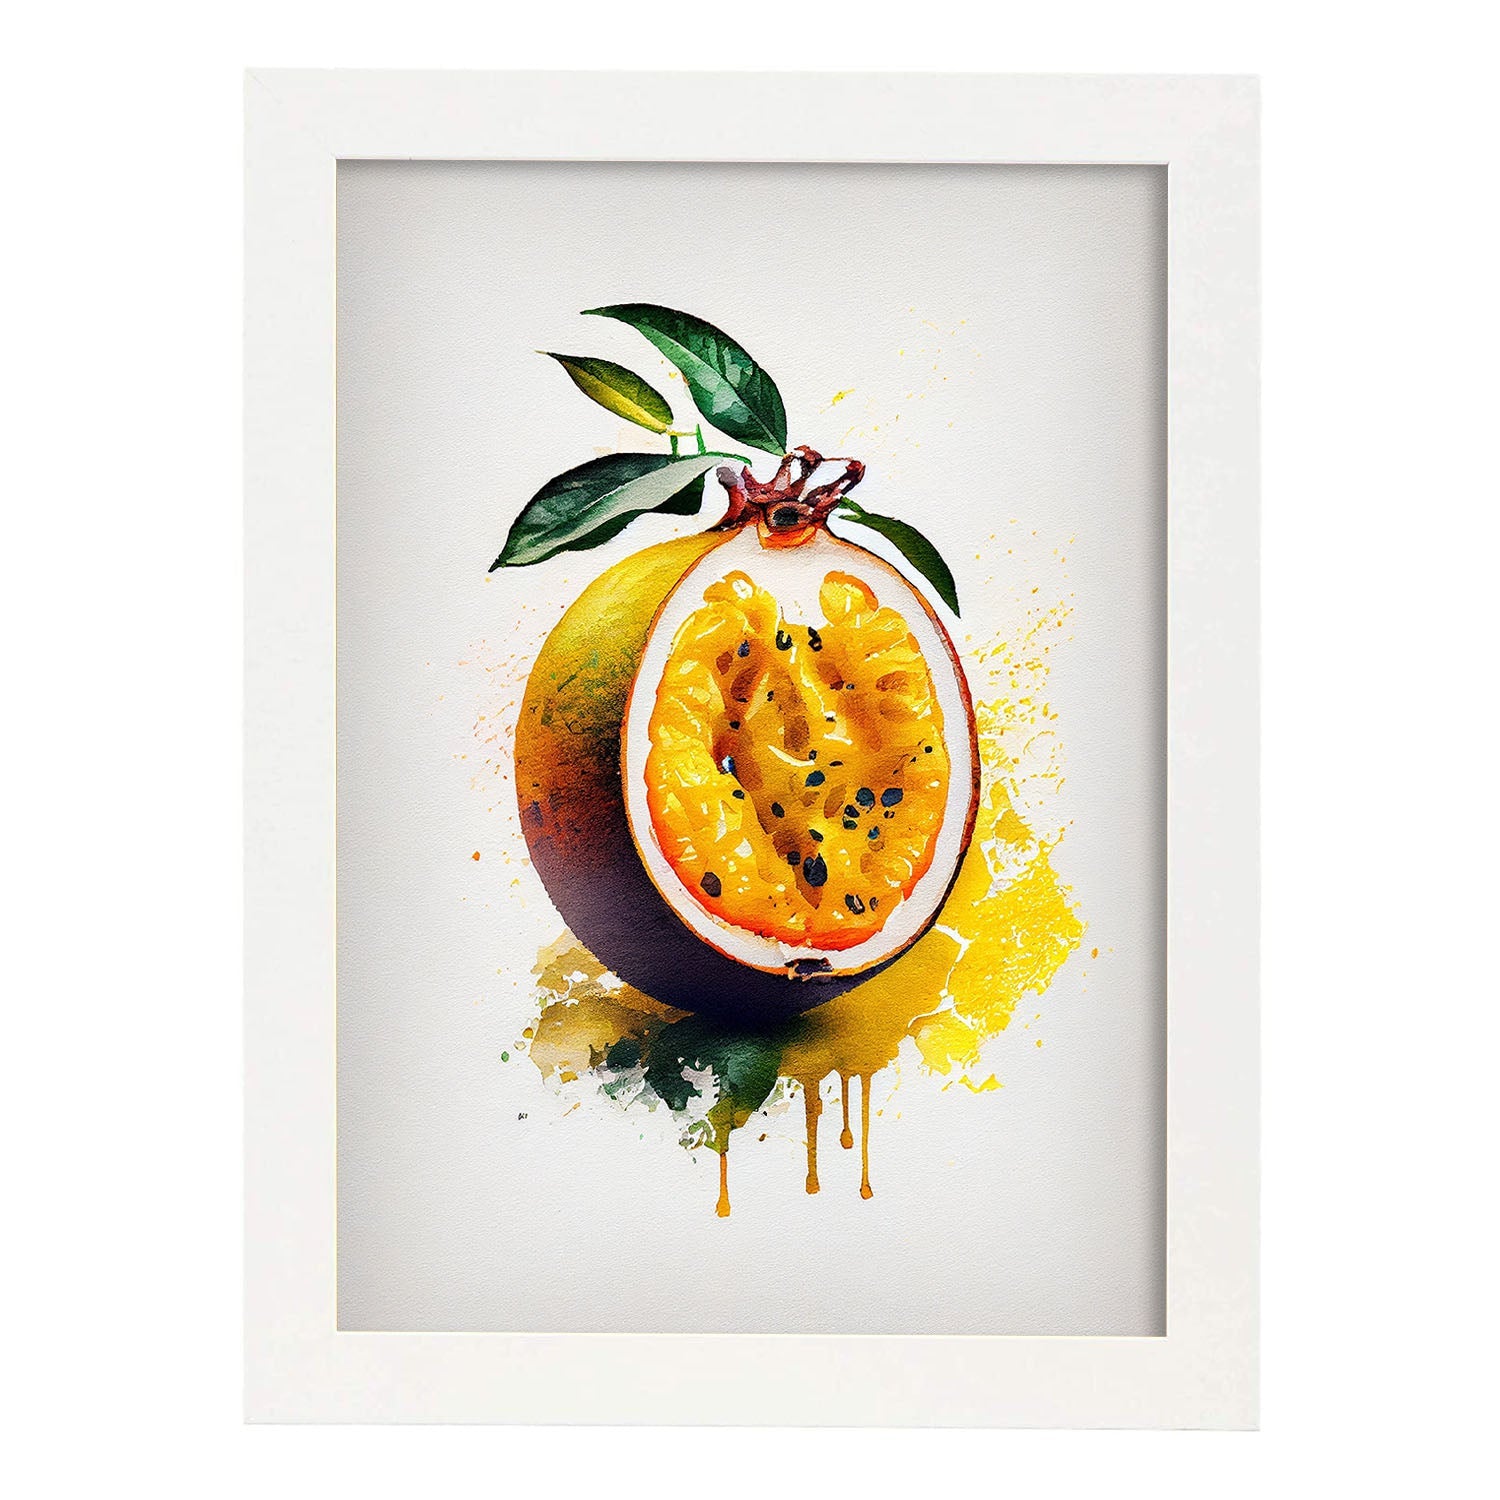 Nacnic minimalist Passionfruit_2. Aesthetic Wall Art Prints for Bedroom or Living Room Design.-Artwork-Nacnic-A4-Marco Blanco-Nacnic Estudio SL